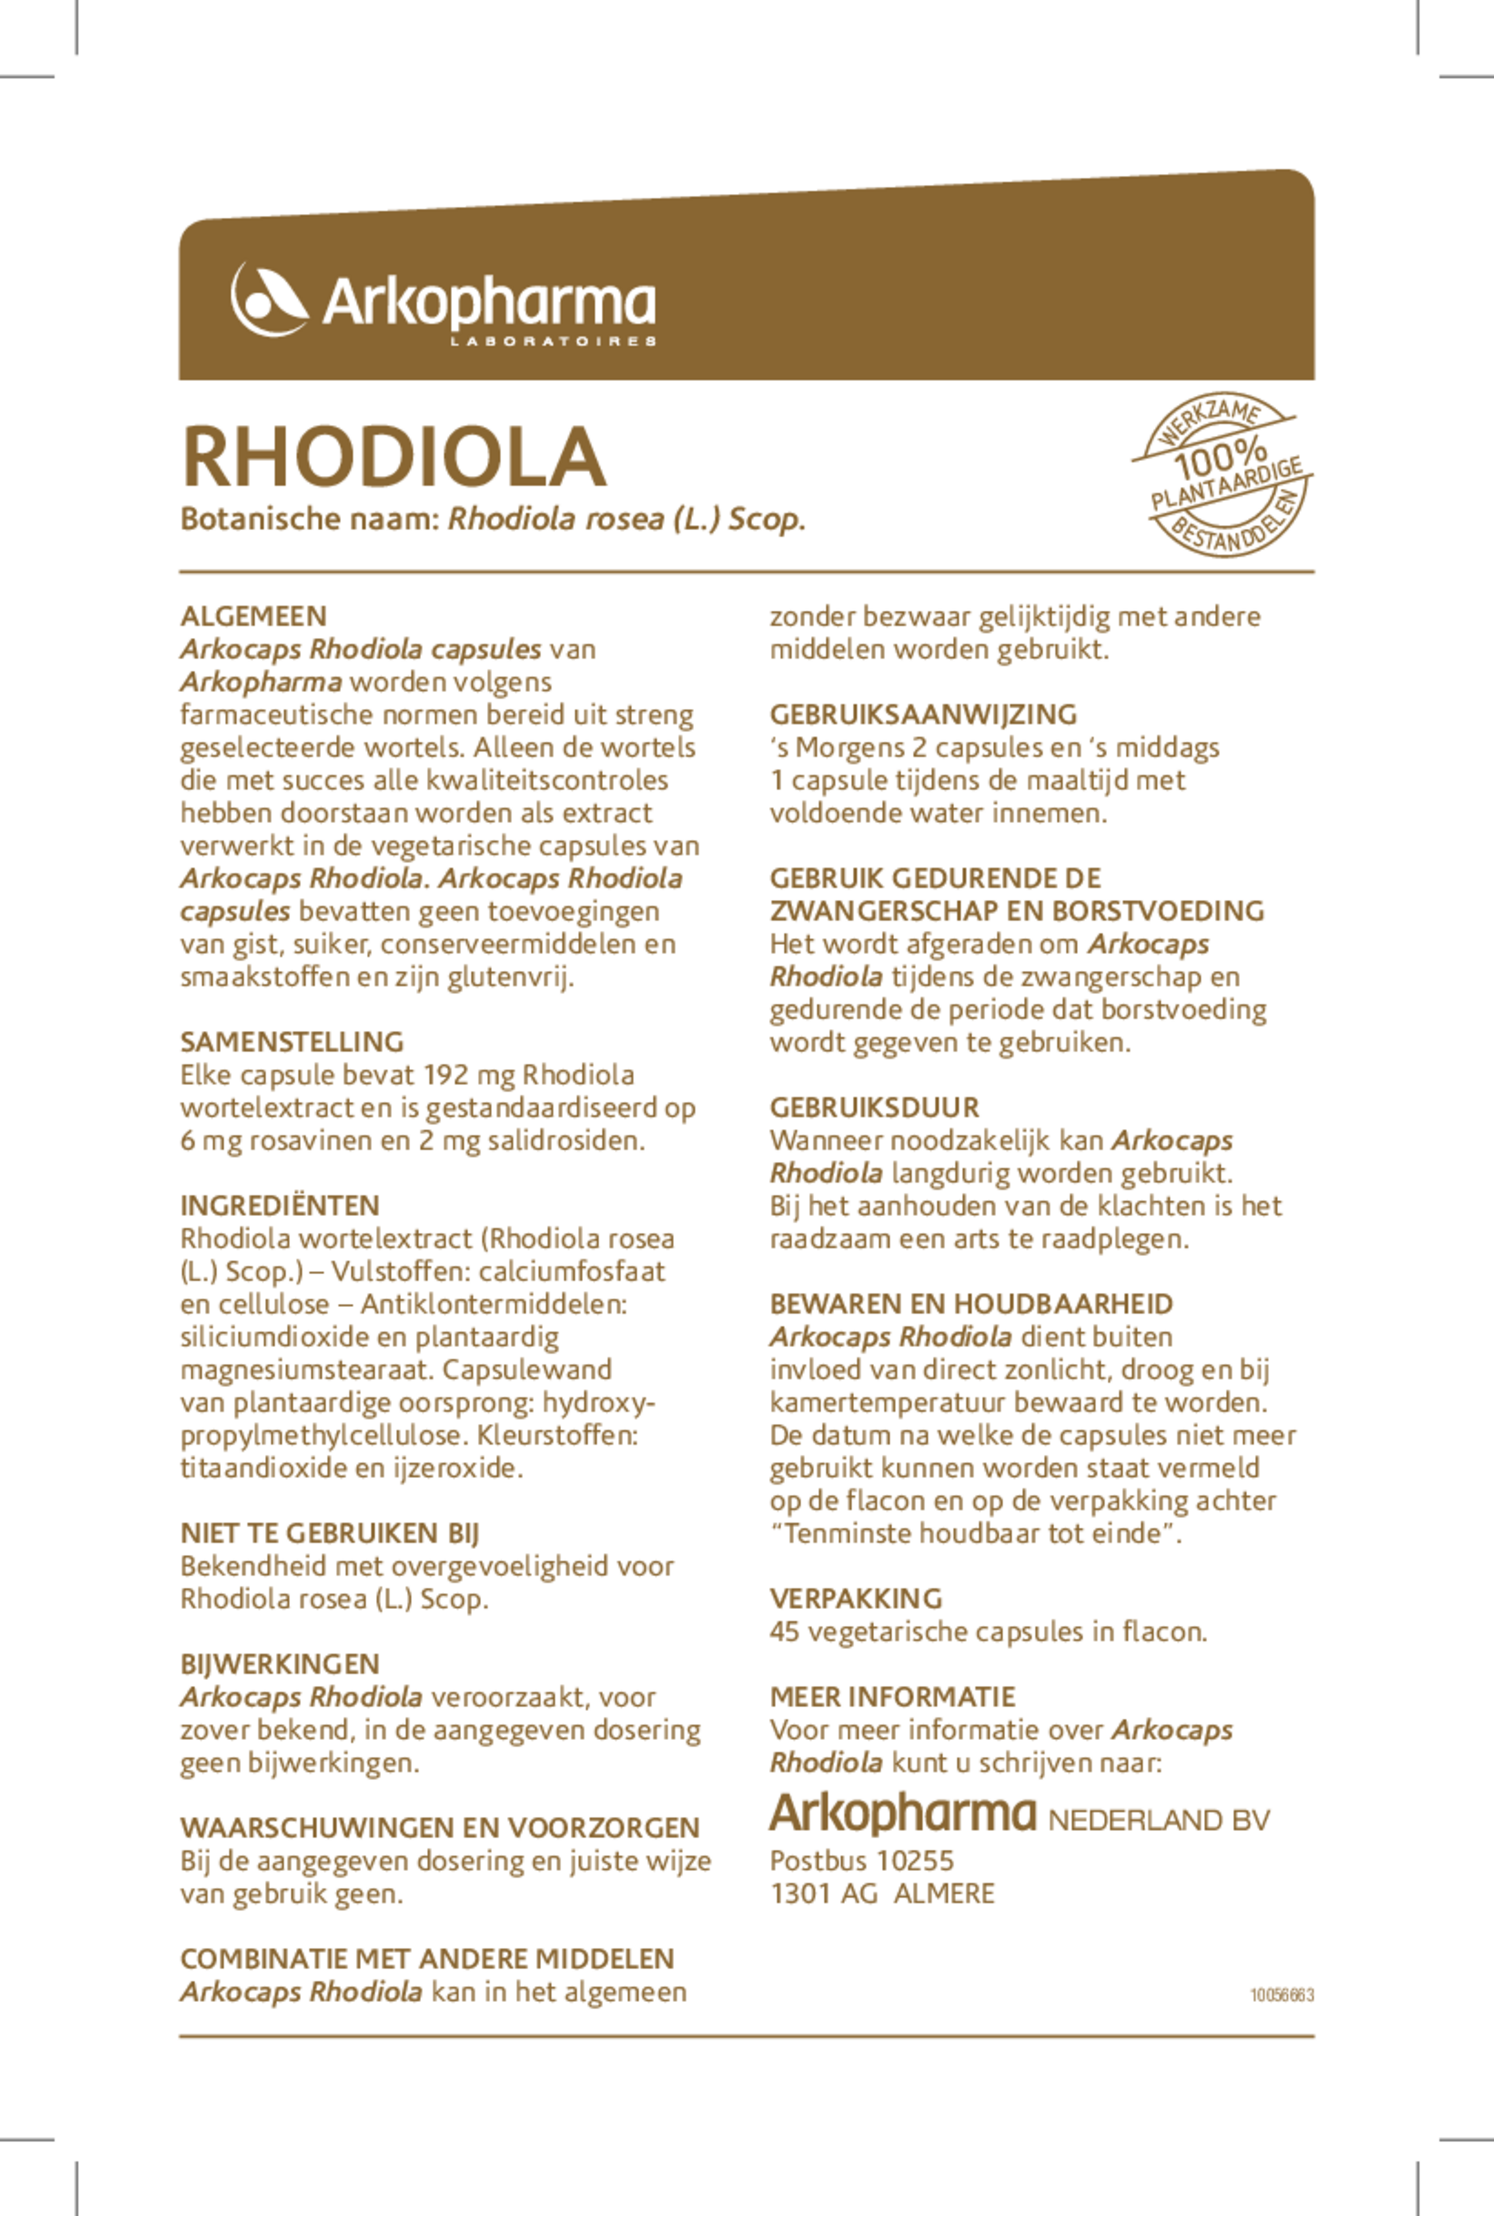 Rhodiola Capsules afbeelding van document #1, gebruiksaanwijzing